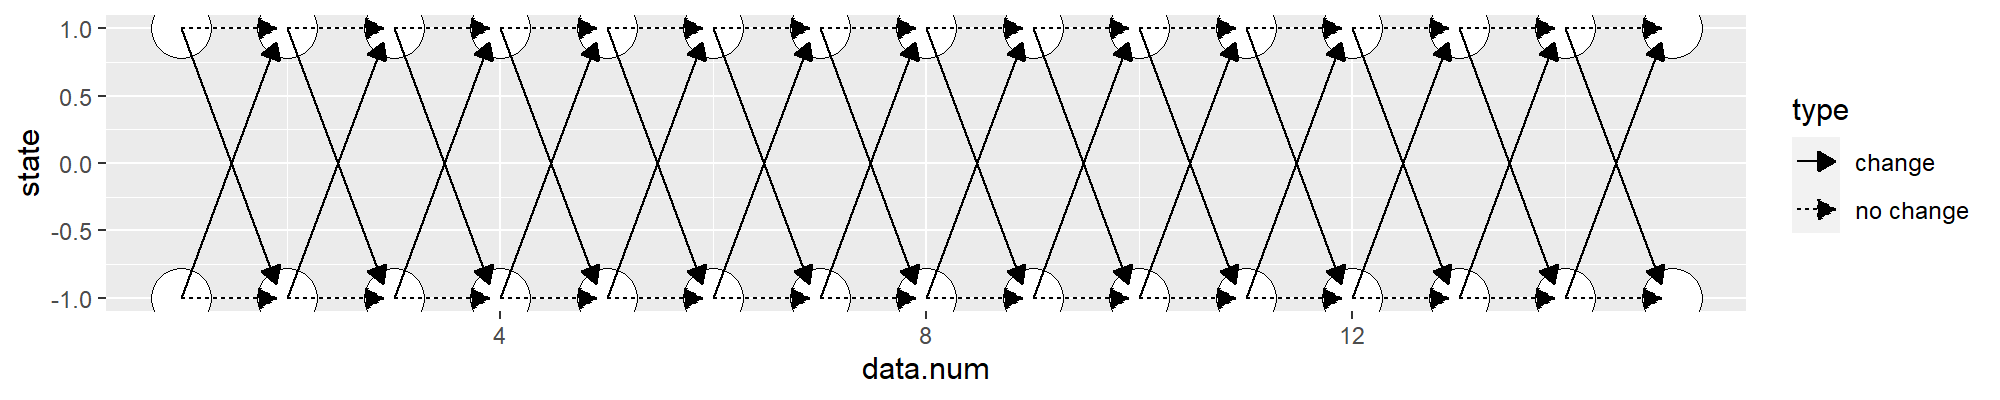 figure-computation-graph.png